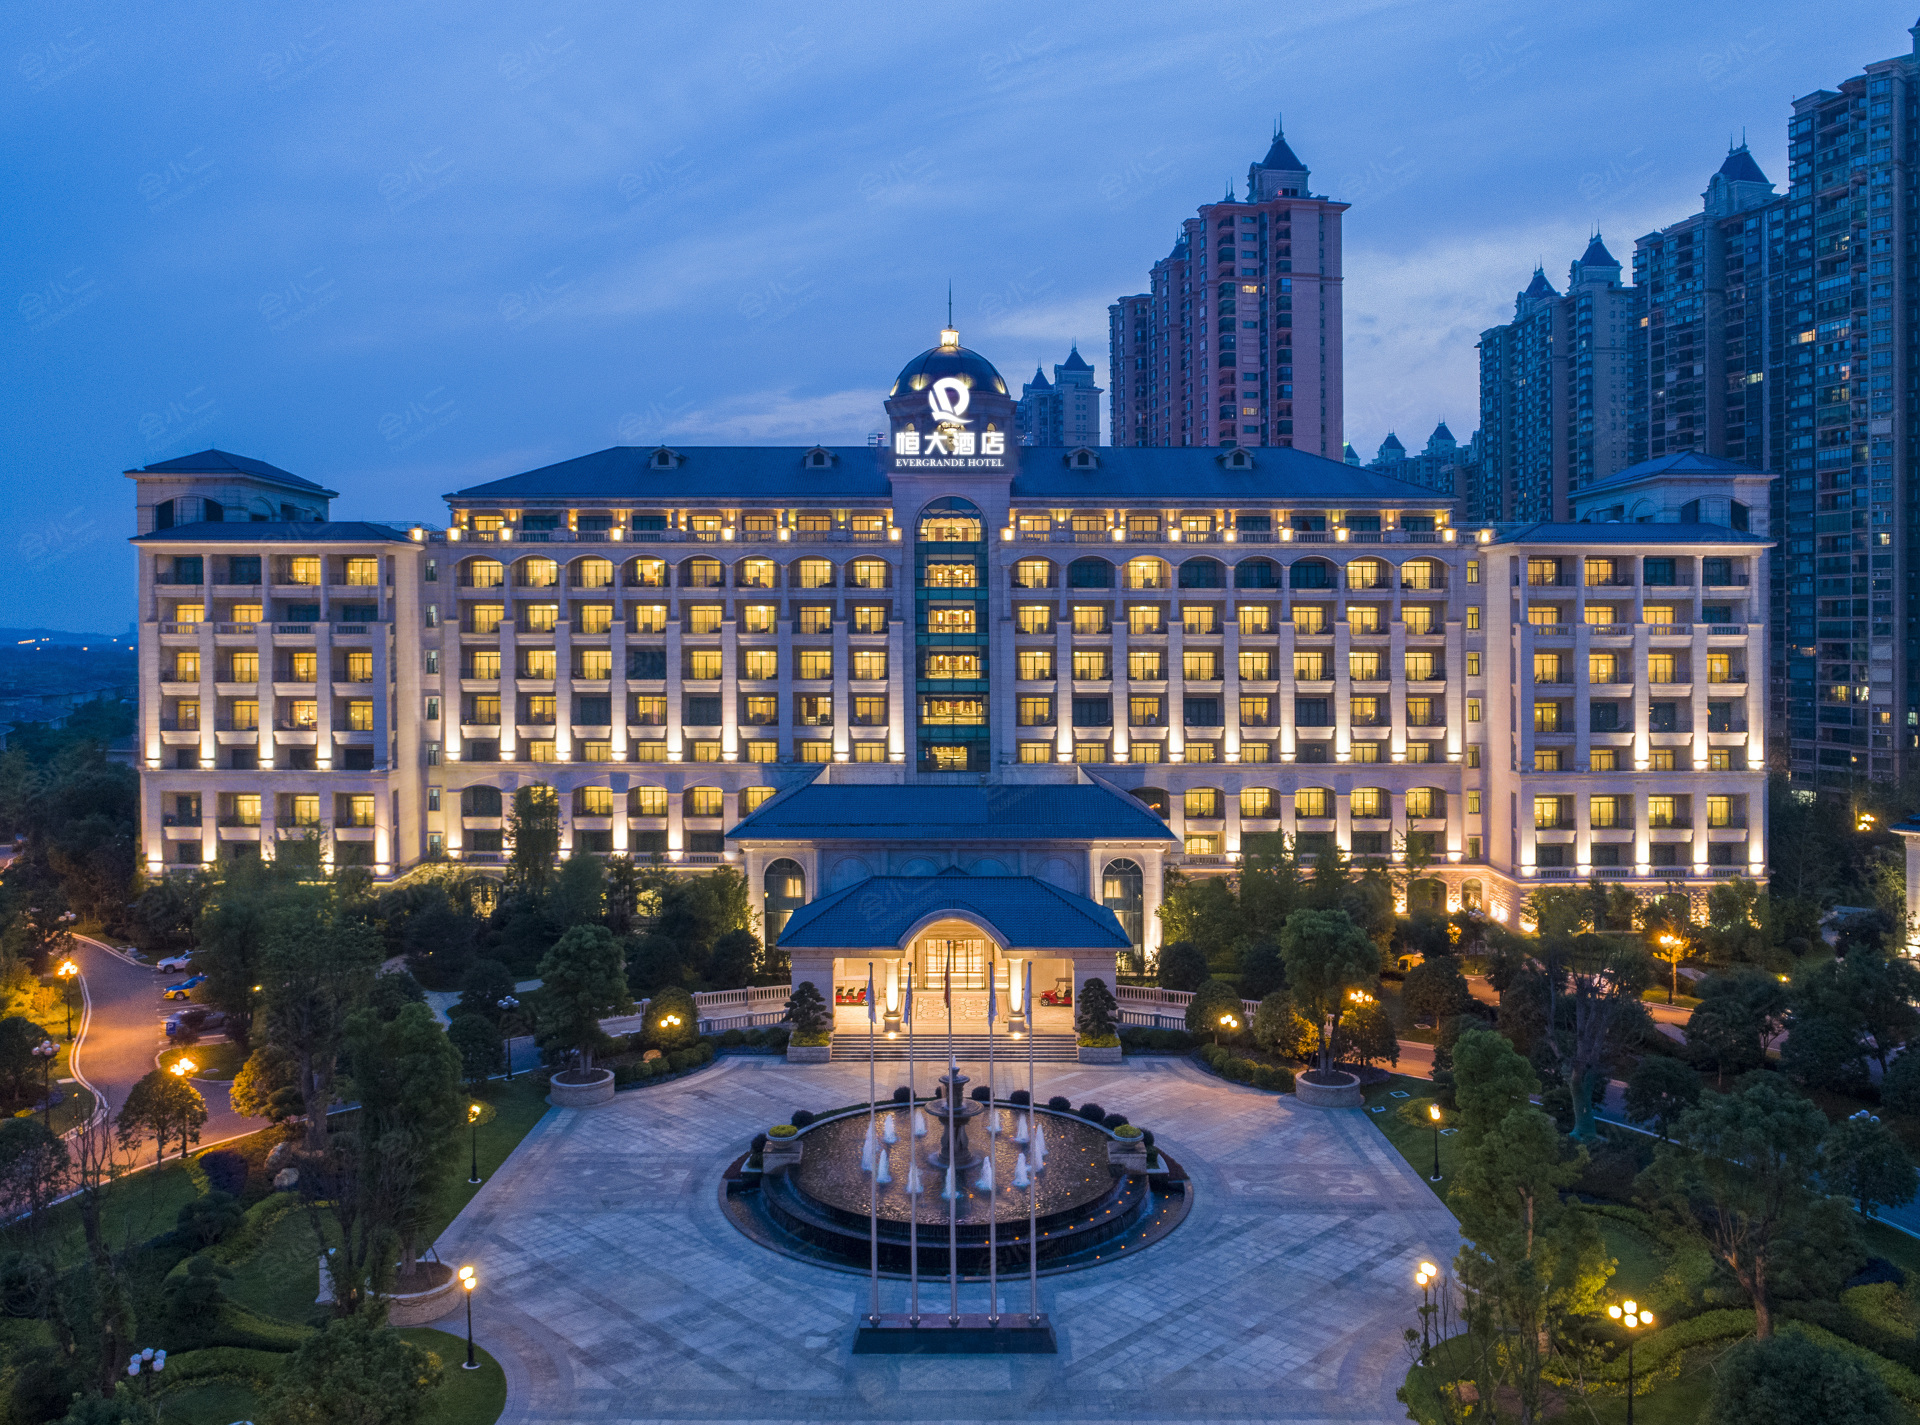 Wyndham Grand Plaza Royale Palace Hotel (Chengdu) - Deals, Photos & Reviews